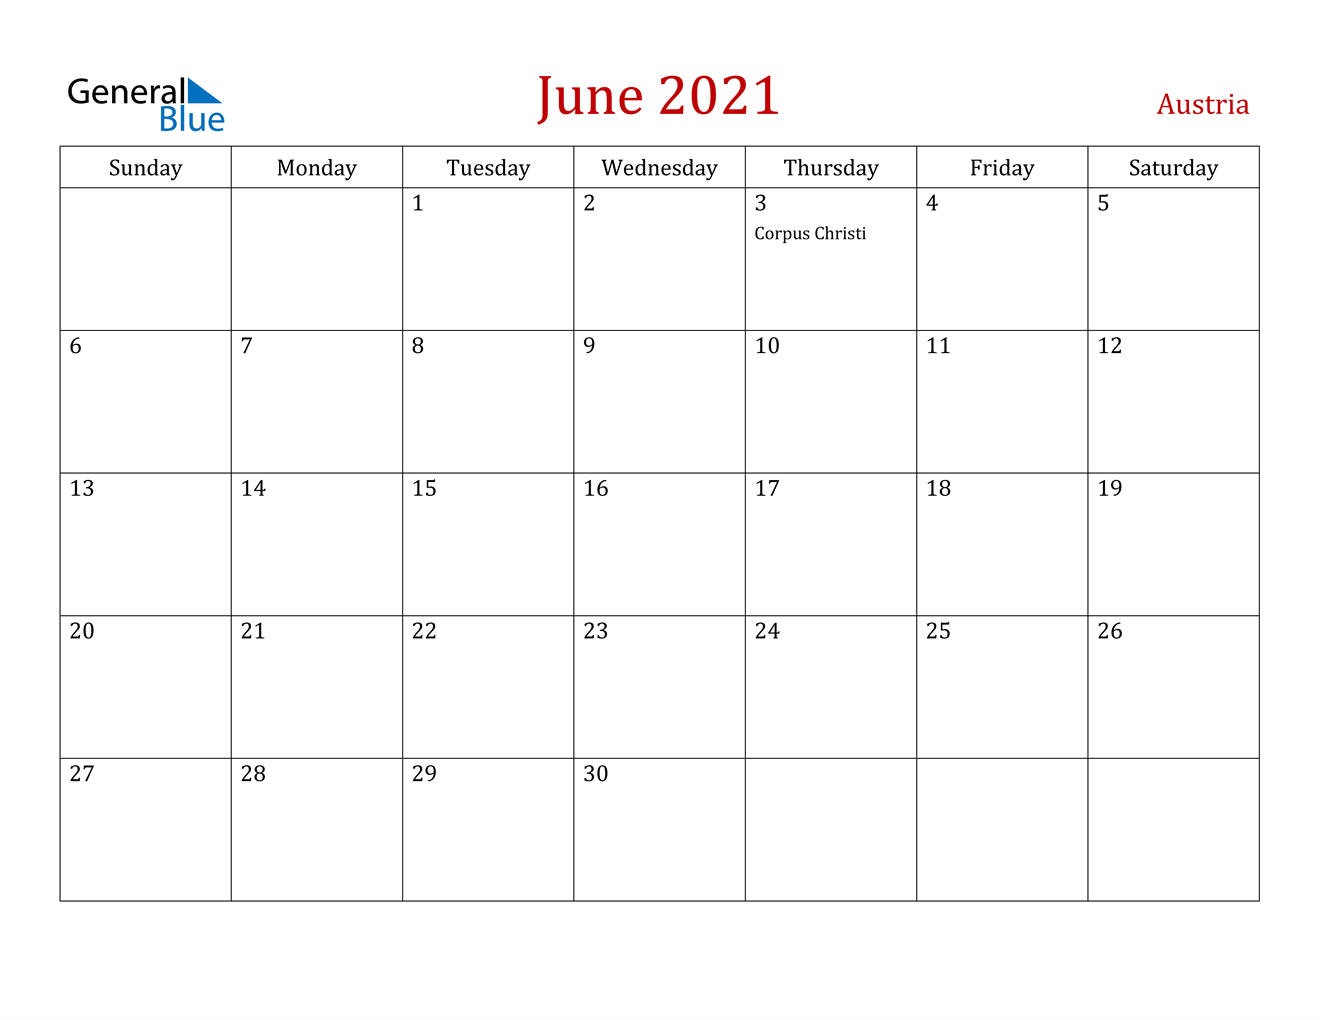 June 2021 Calendar - Austria